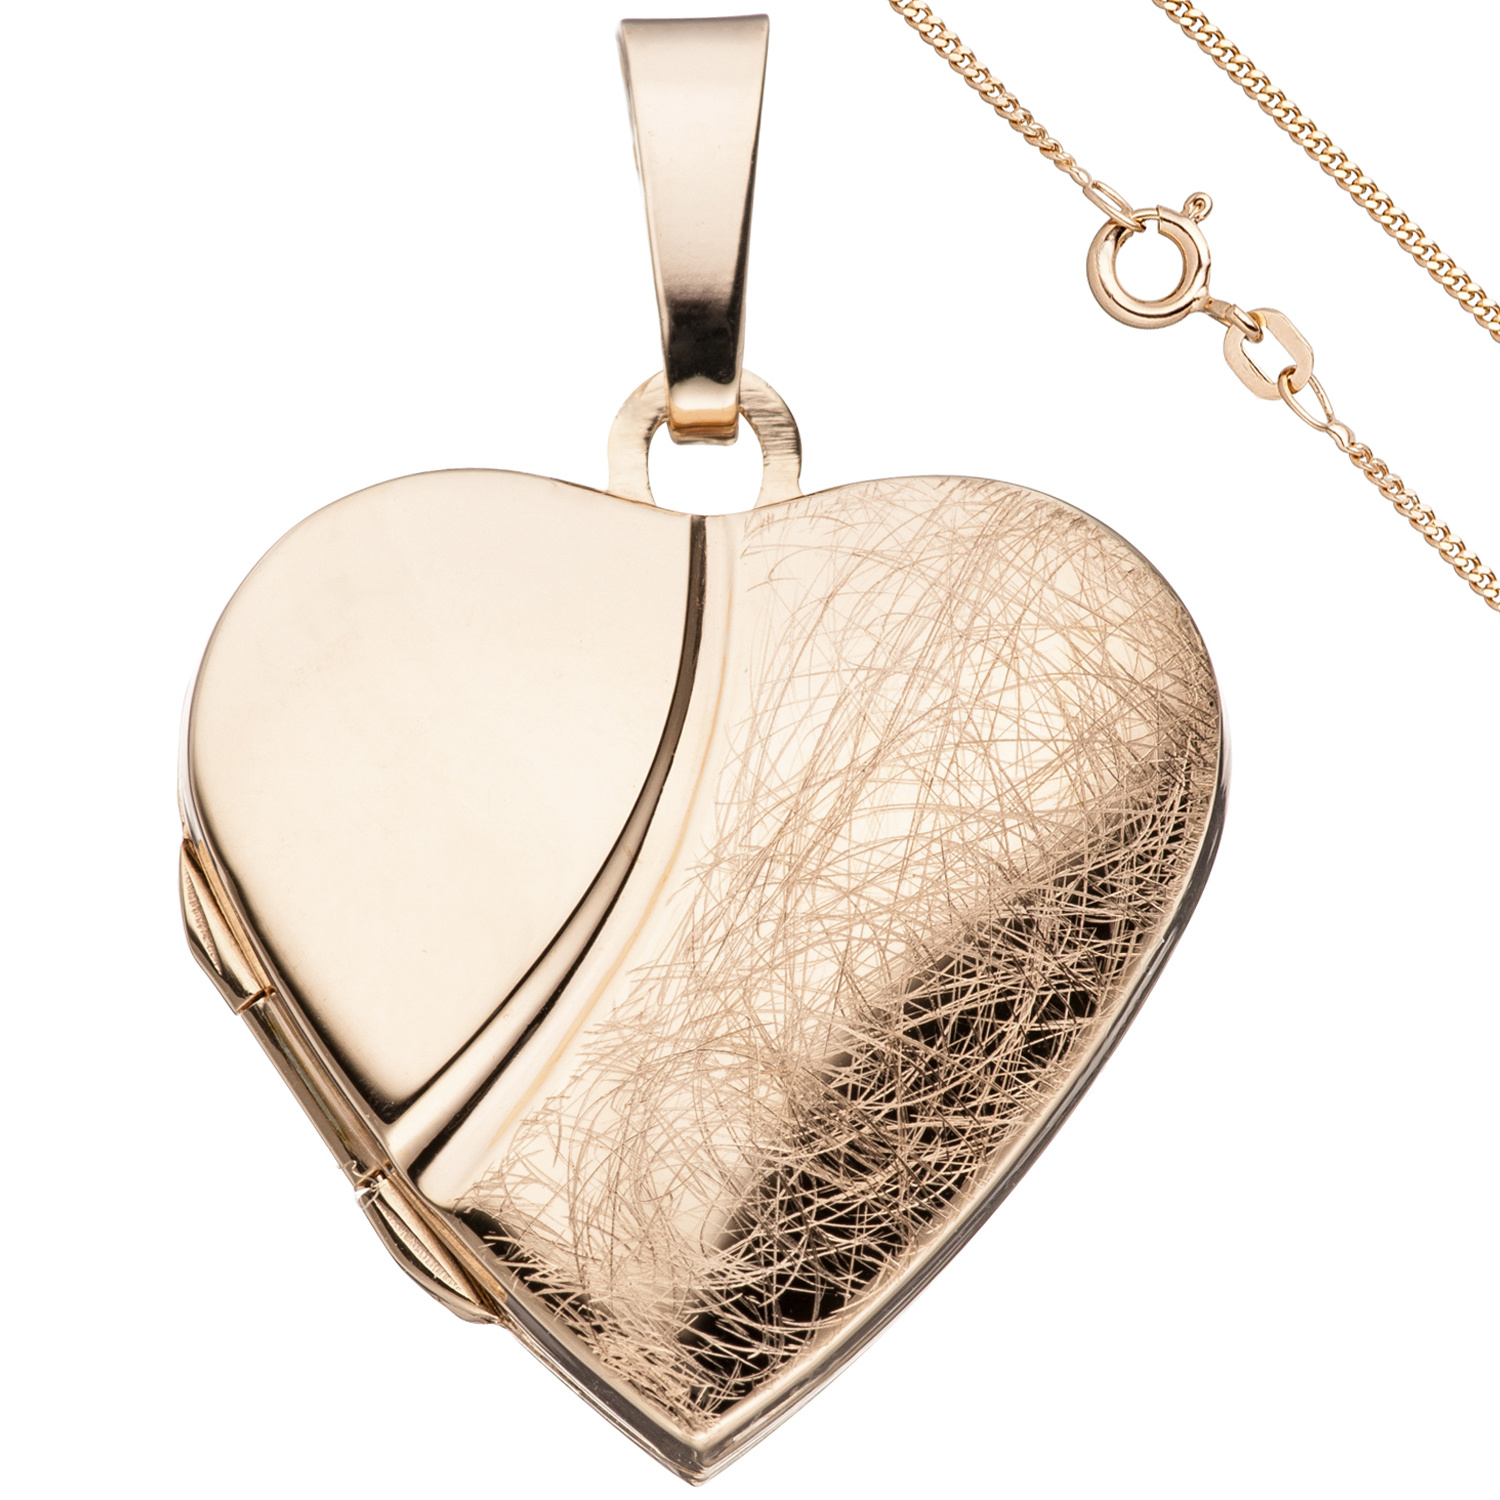 Medaillon Herz Anhänger zum Öffnen 925 Silber rosegold vergoldet mit Kette  45 cm –